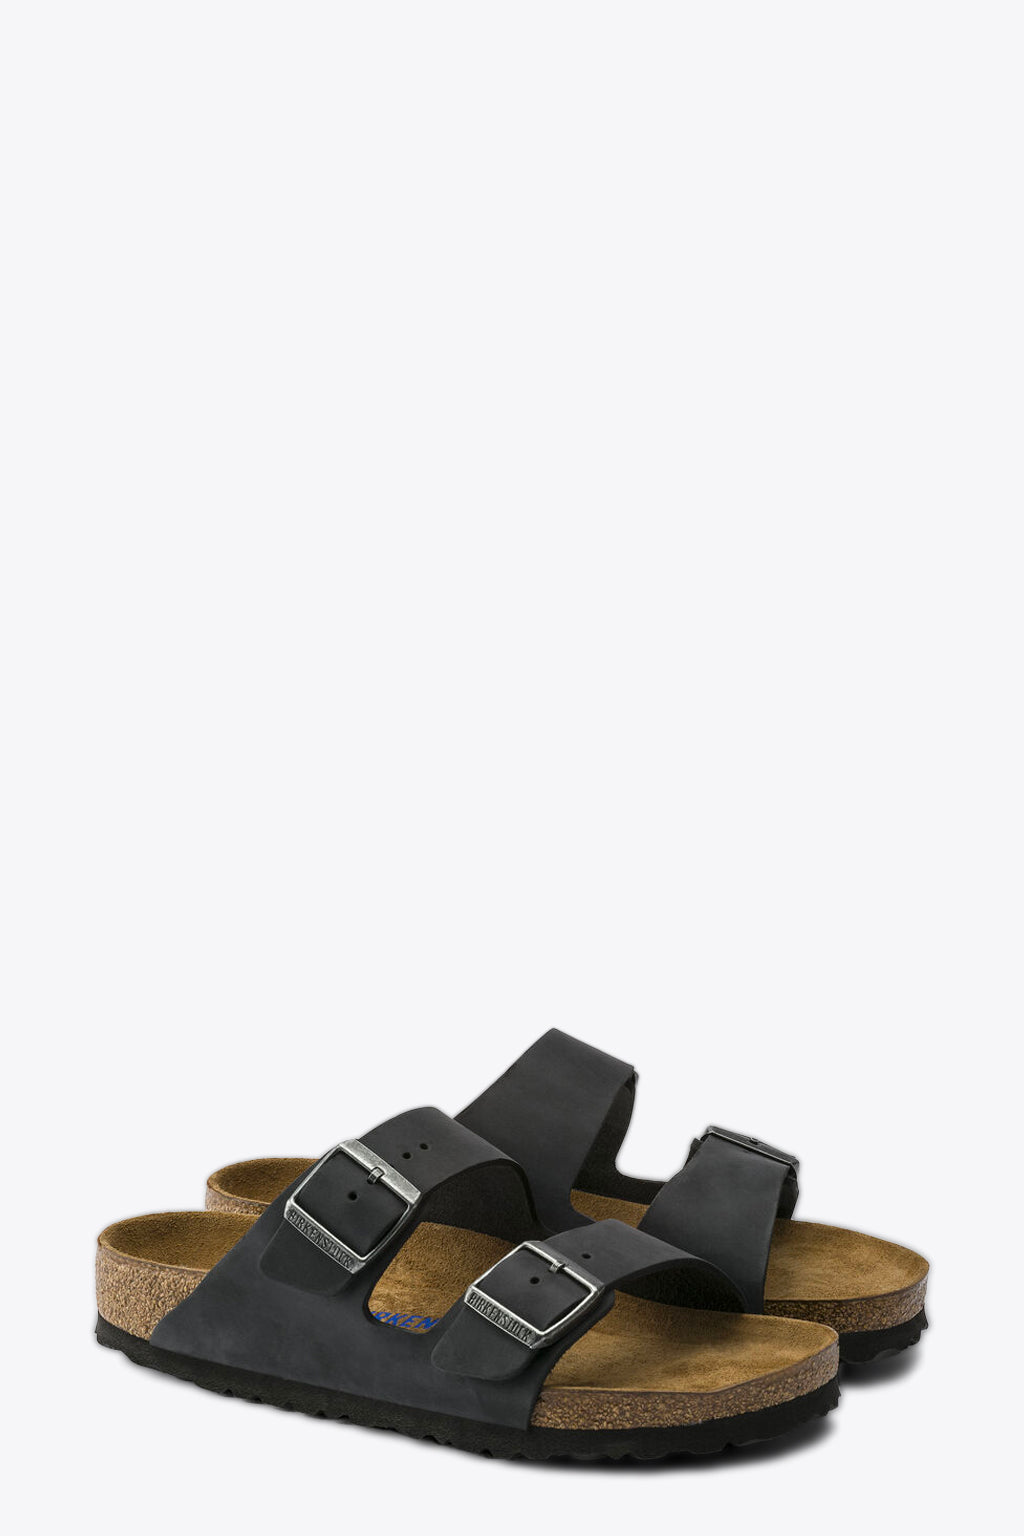 alt-image__Black-leather-sandal-with-buckles---Arizona